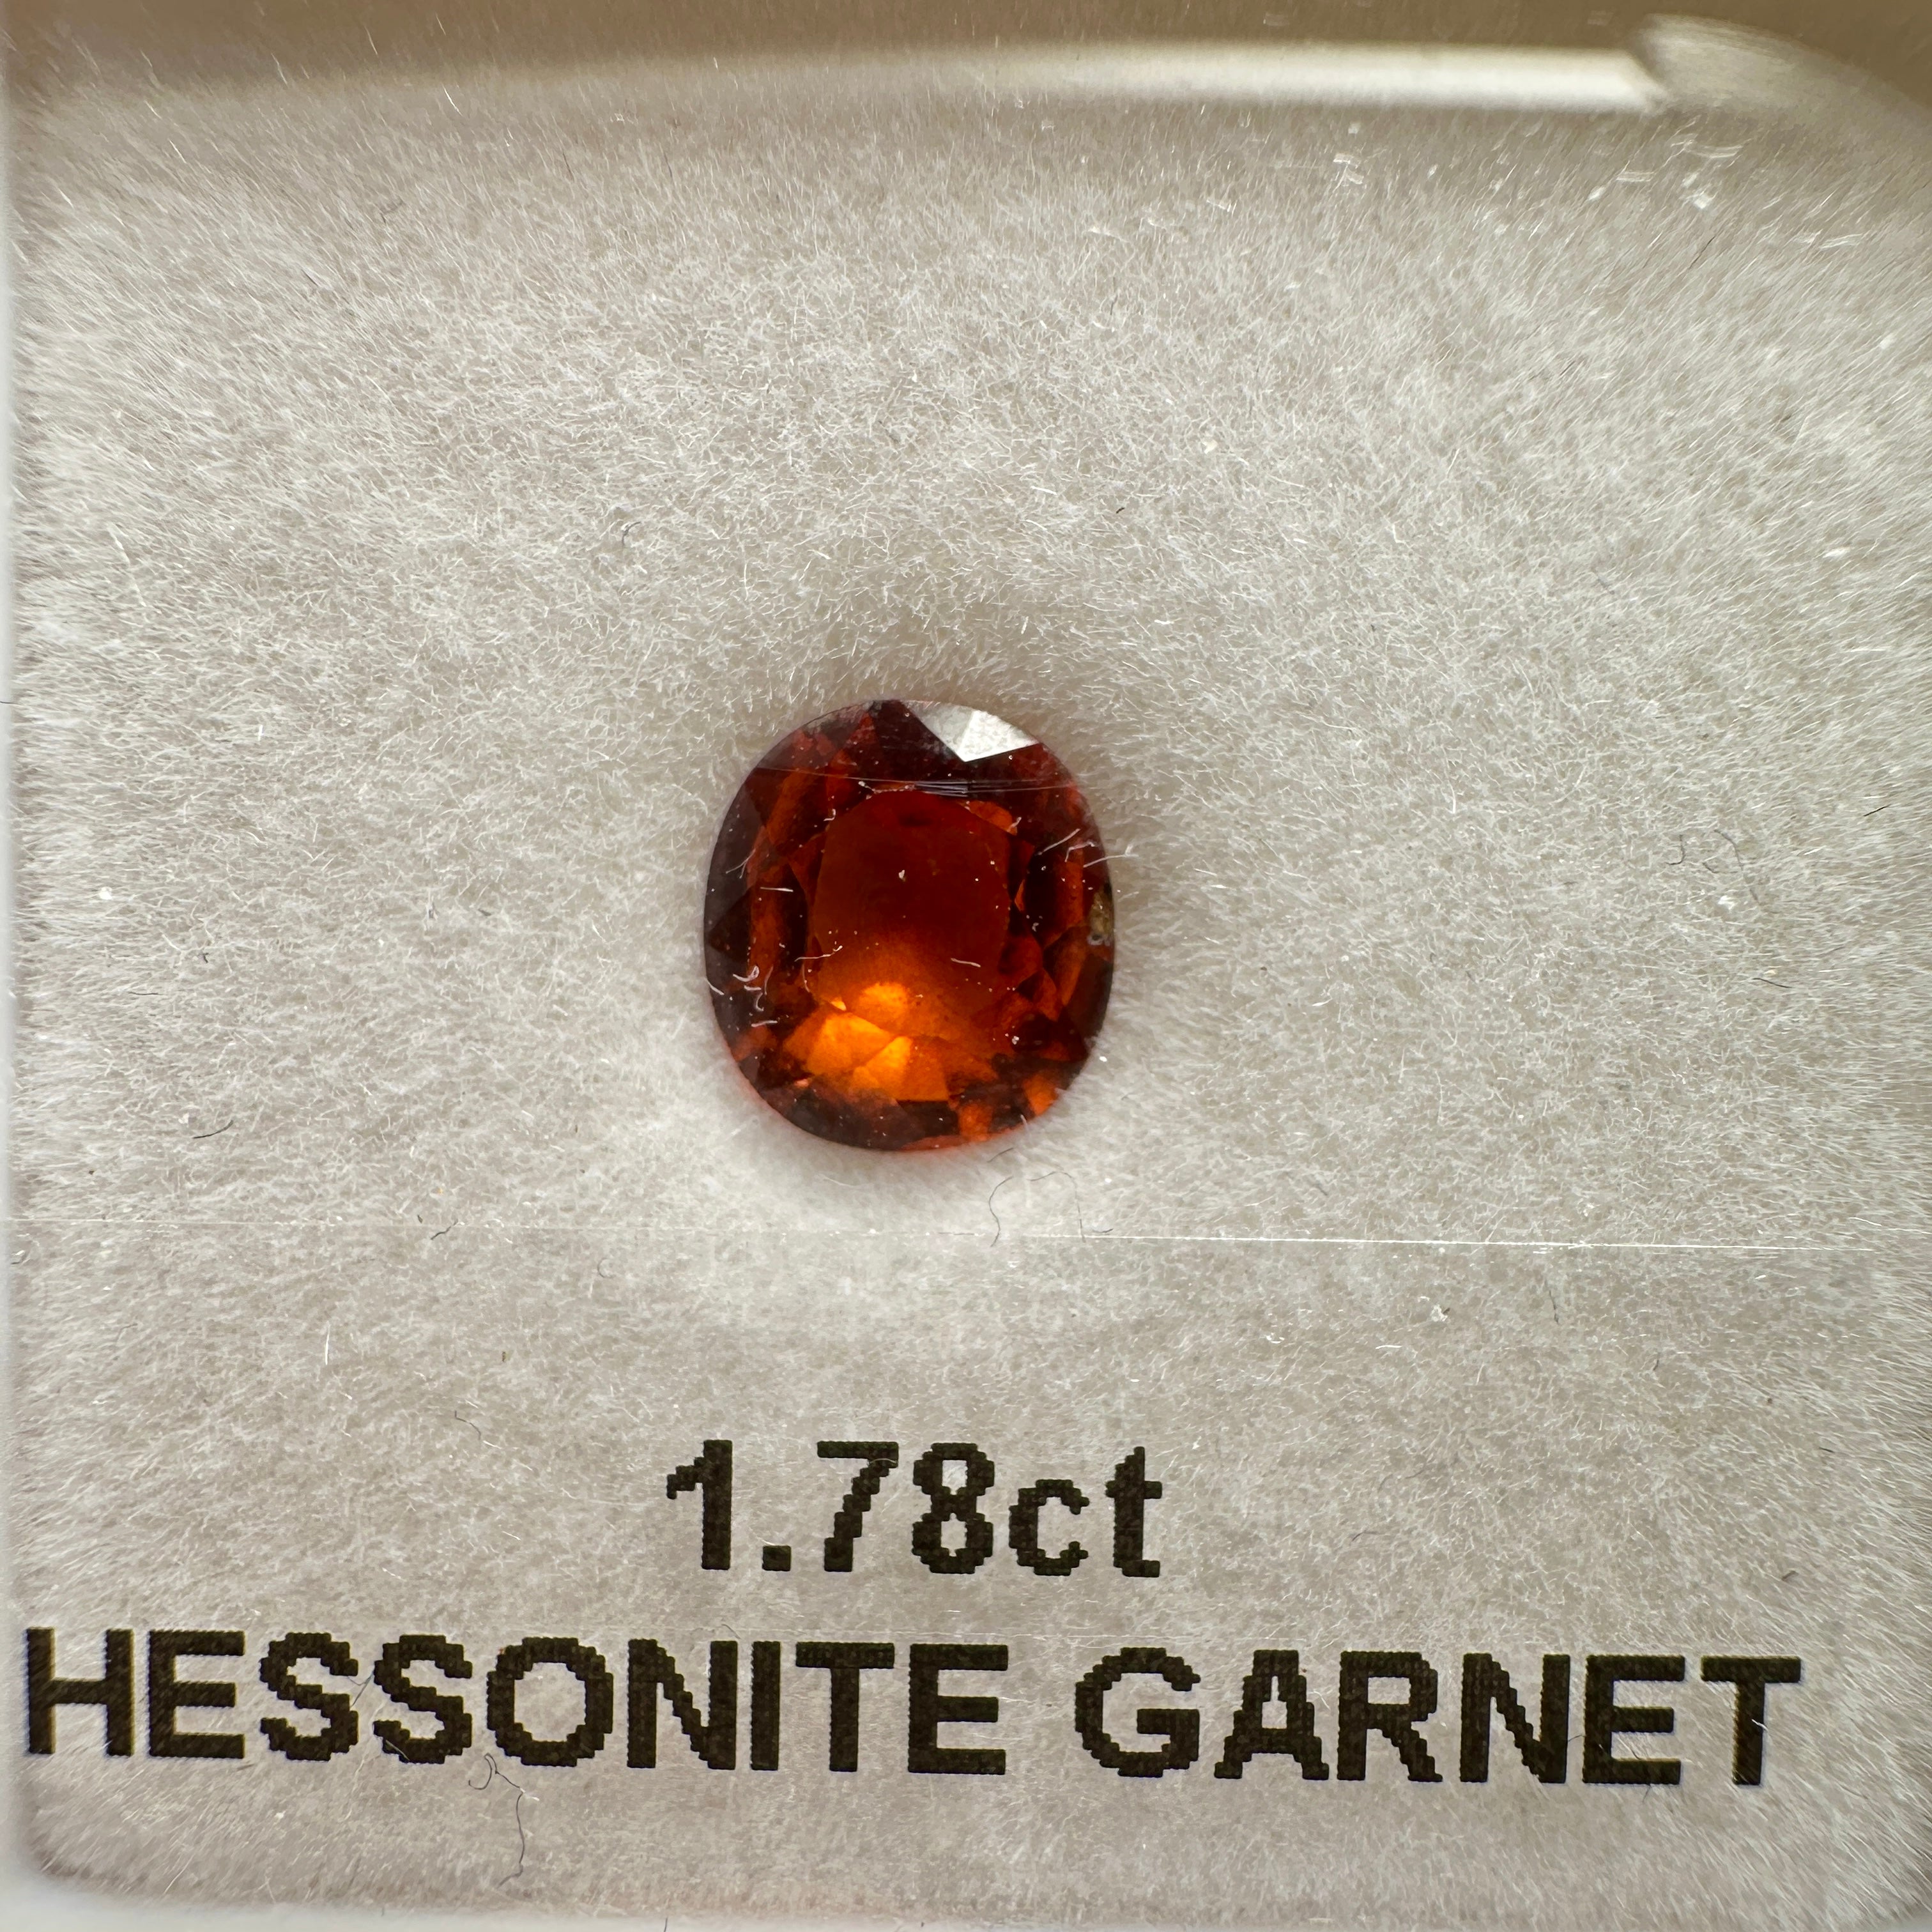 1.78ct Hessonite Garnet, Untreated Unheated, native cut